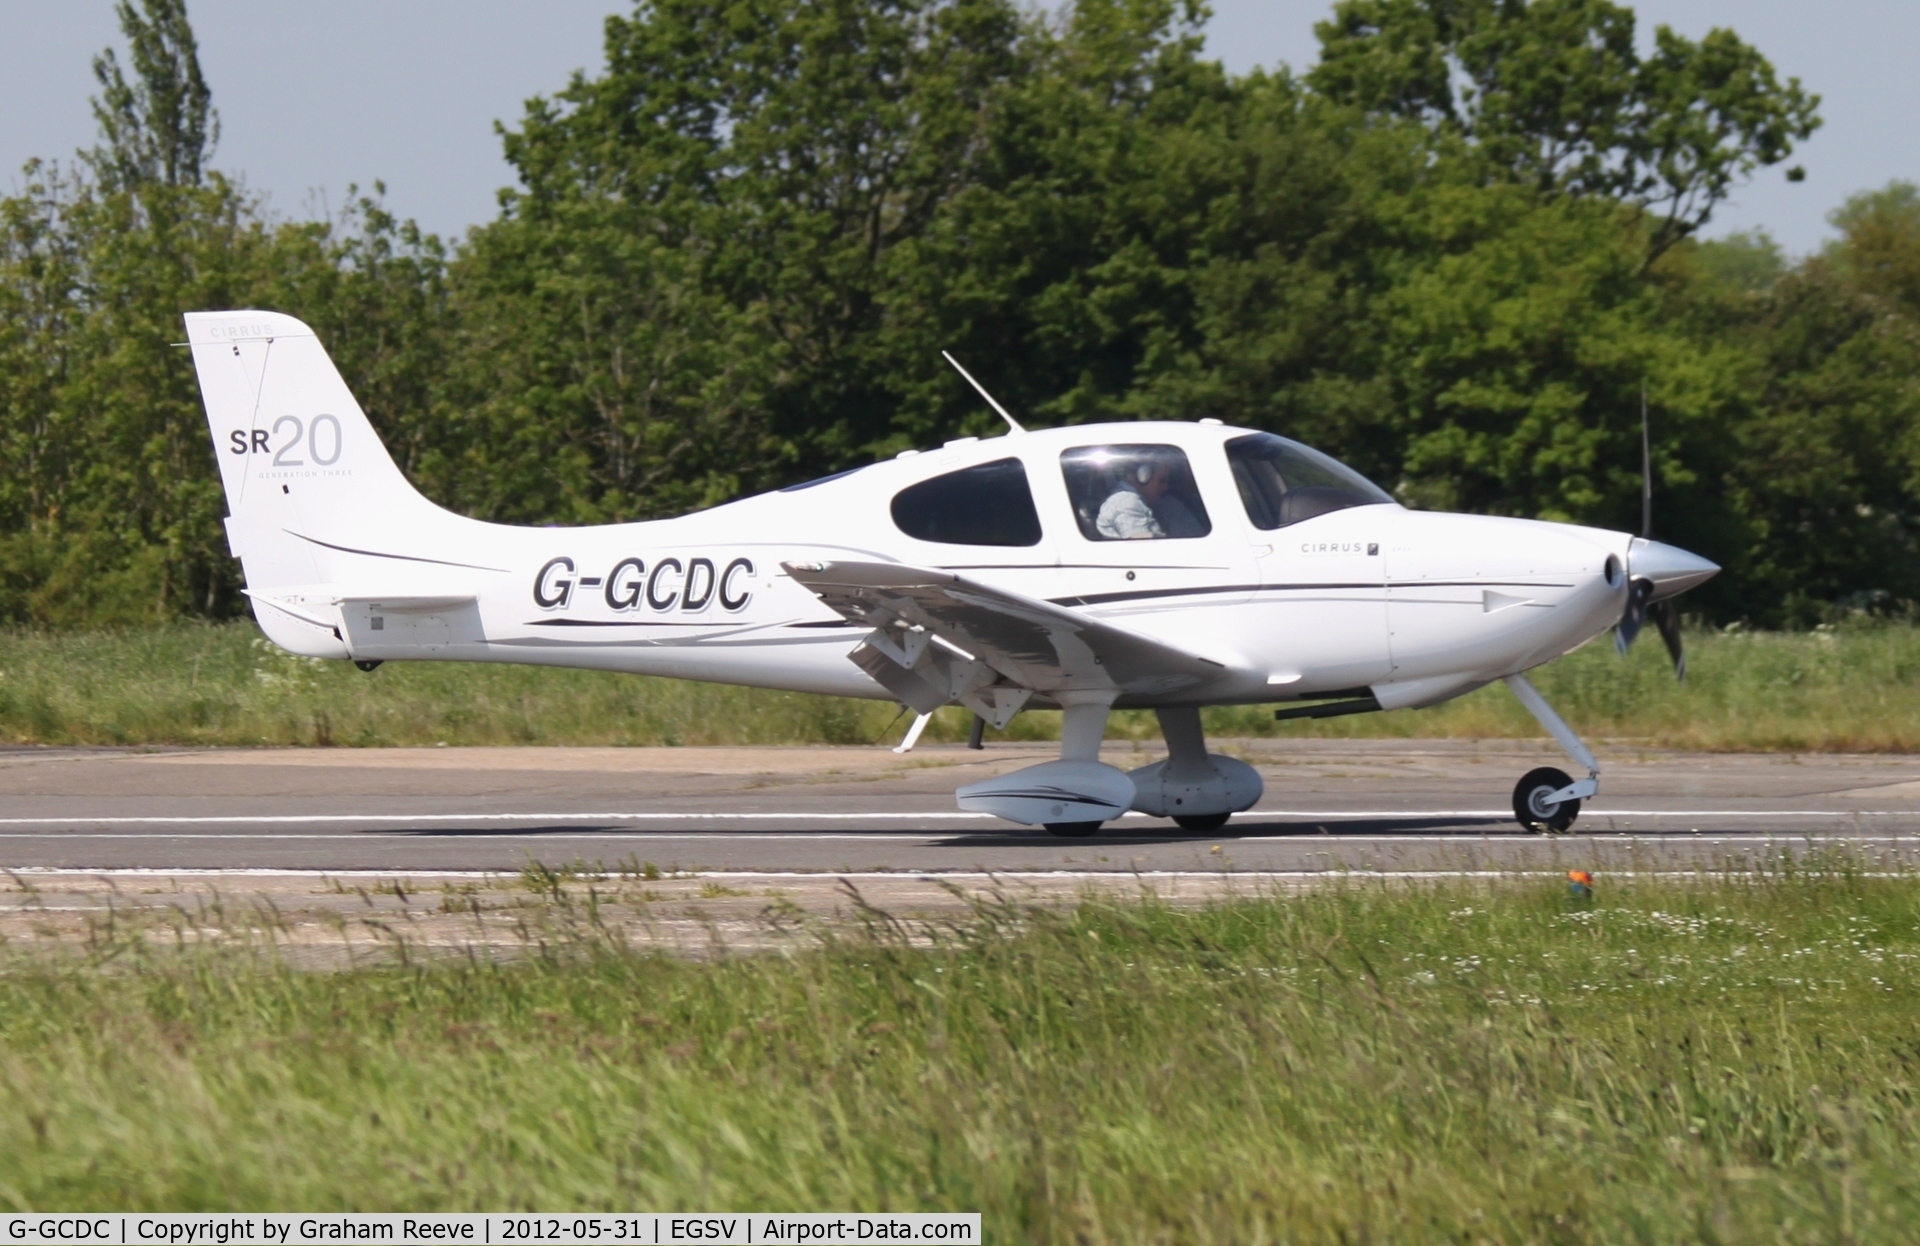 G-GCDC, 2008 Cirrus SR20 G3 C/N 2008, Just landed.